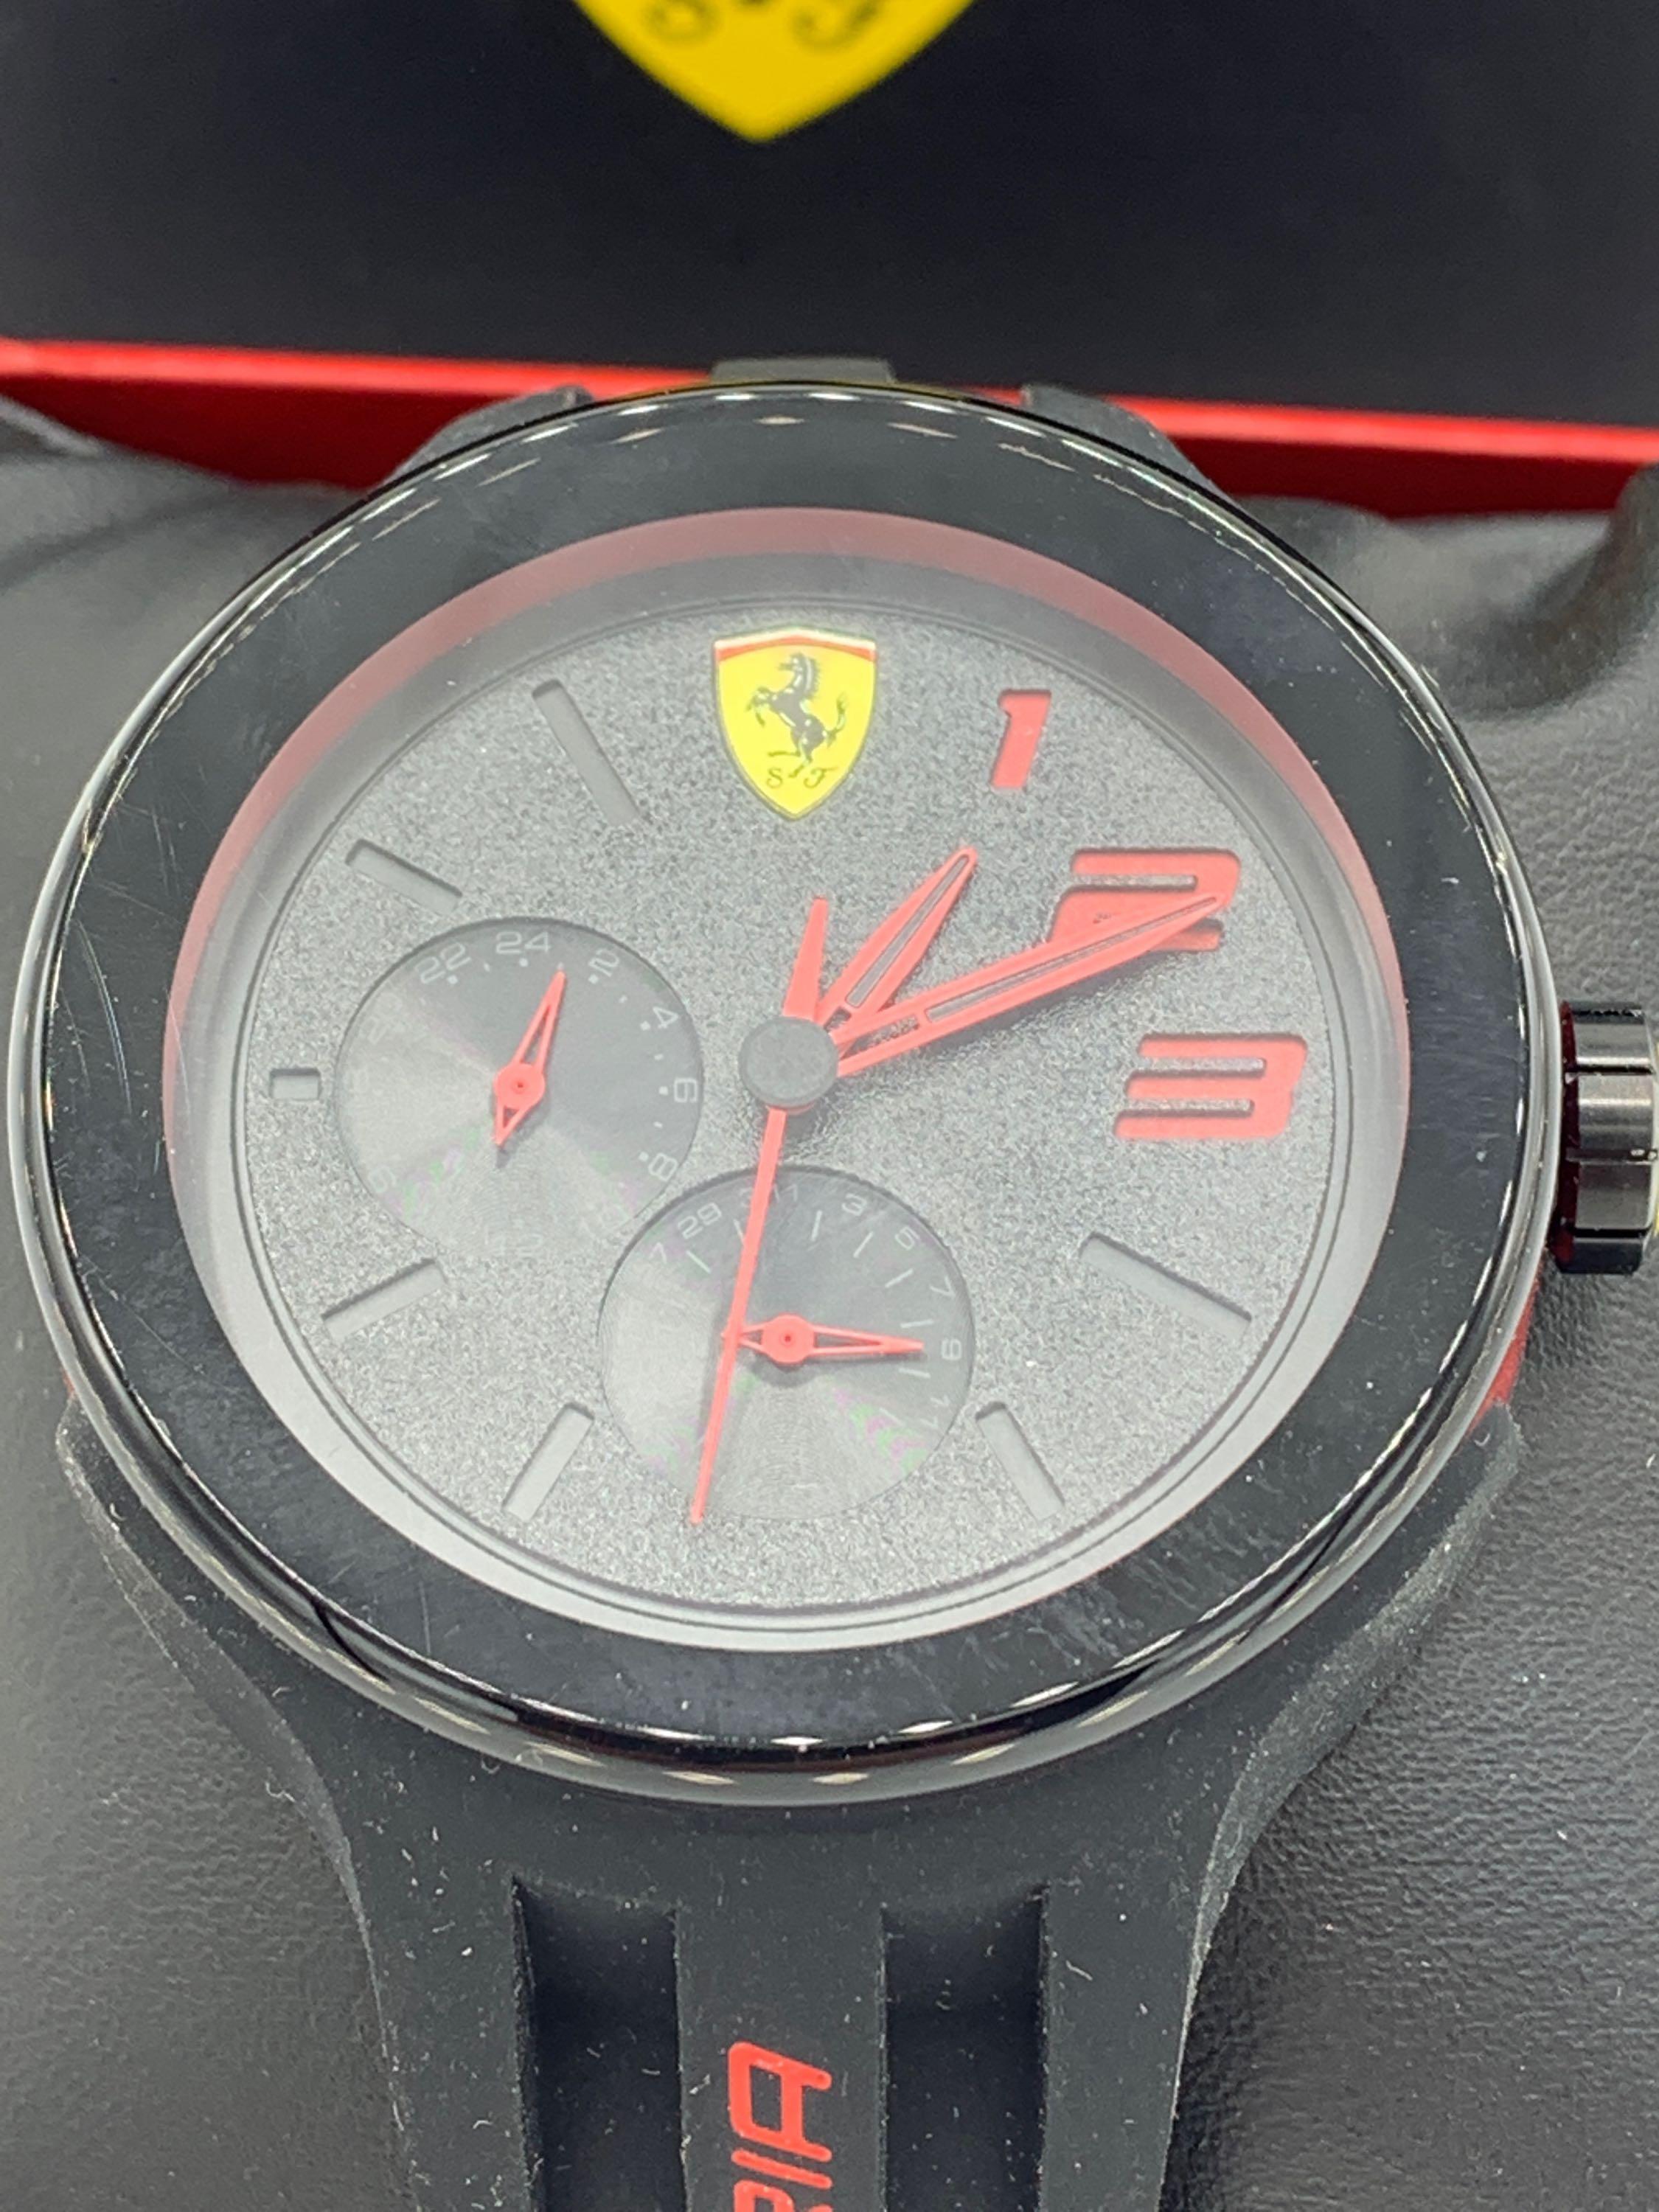 Scuderia Ferrari black faced watch and strap - Image 2 of 3